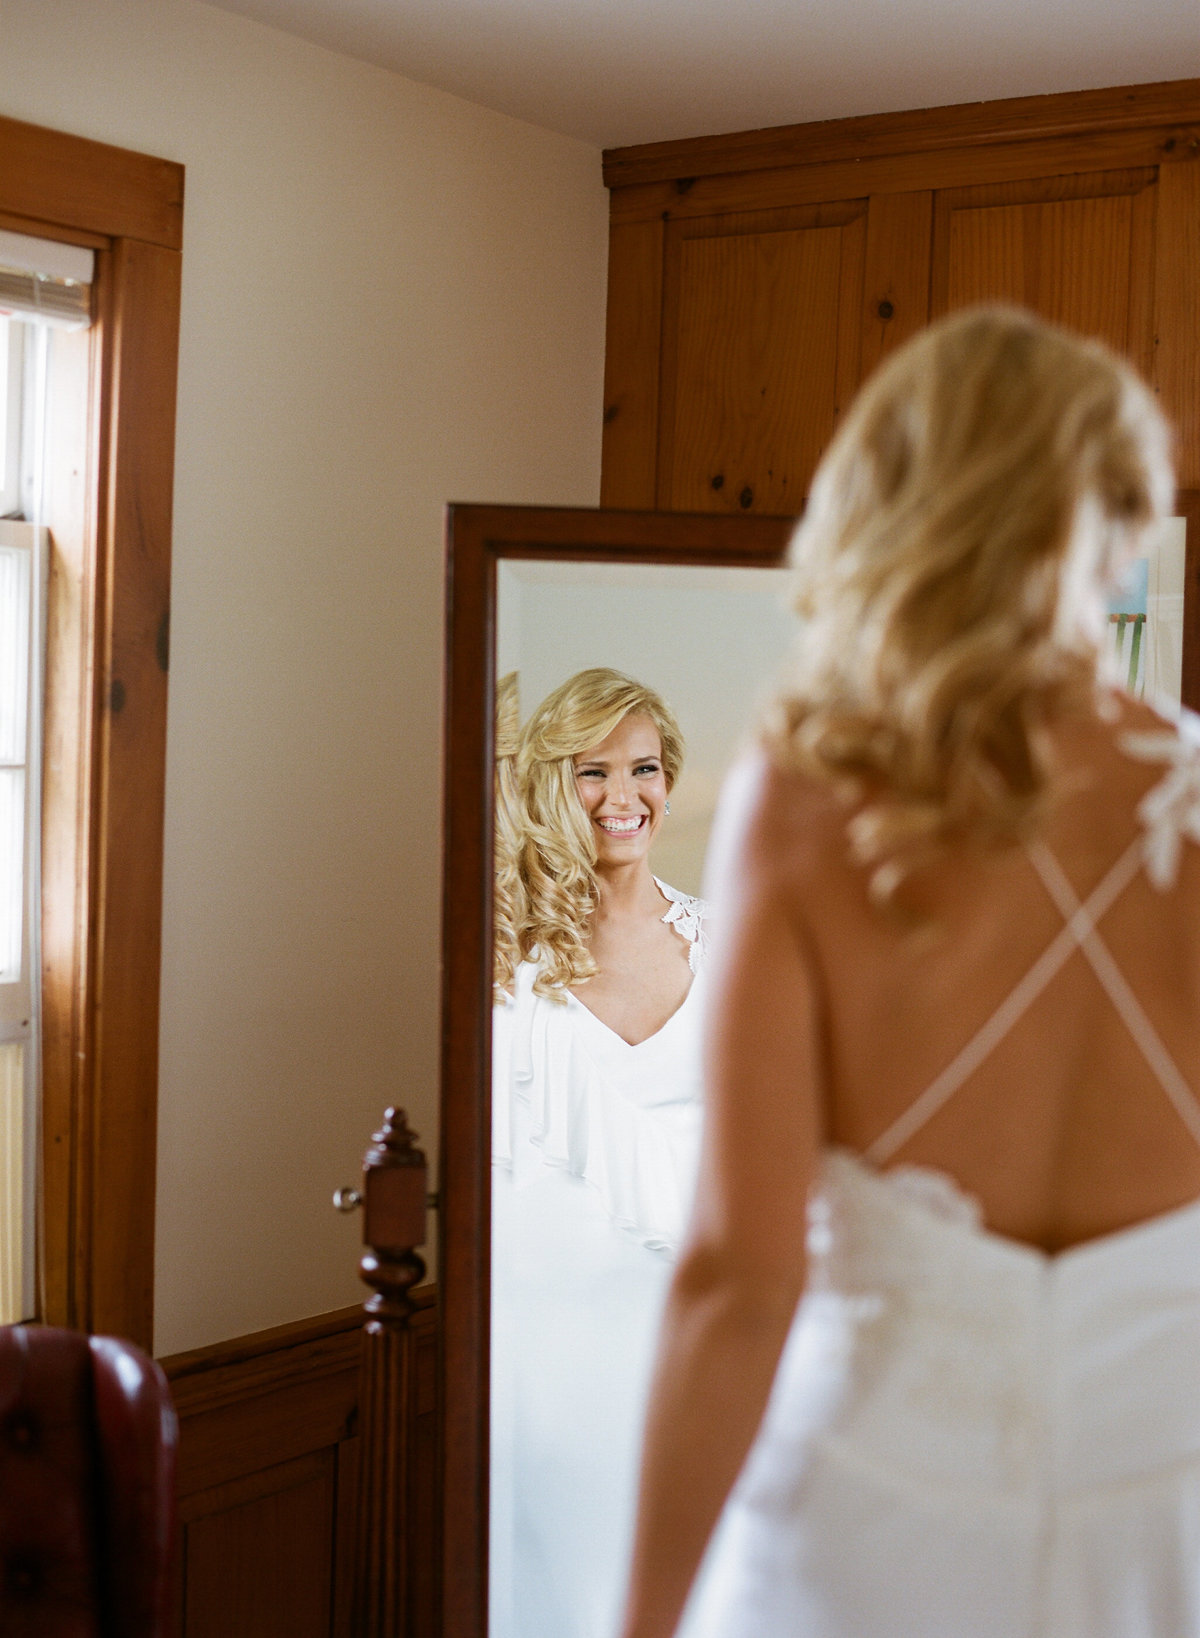 Bride looks at self in mirror